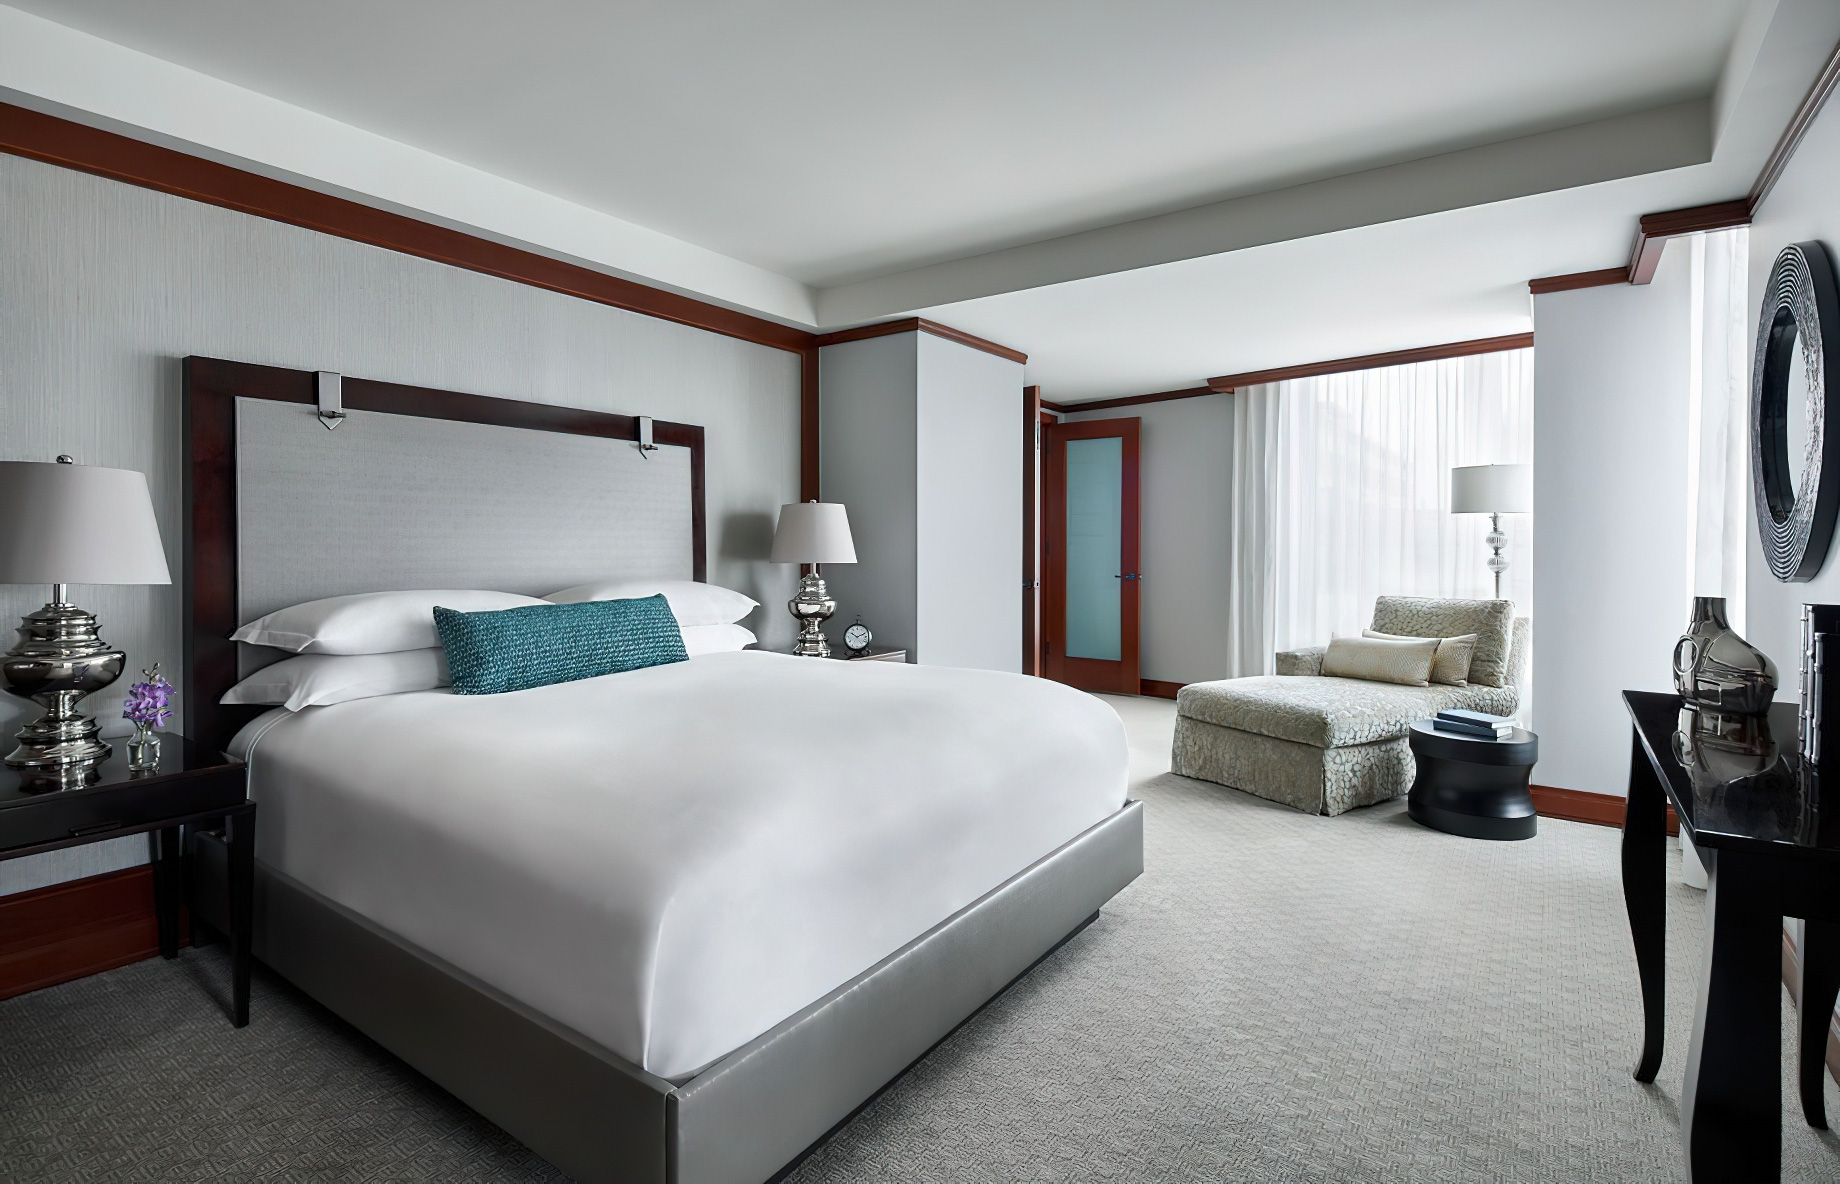 The Ritz-Carlton Georgetown, Washington, D.C. Hotel - Washington, D.C. USA - Ritz-Carlton Suite Bedroom